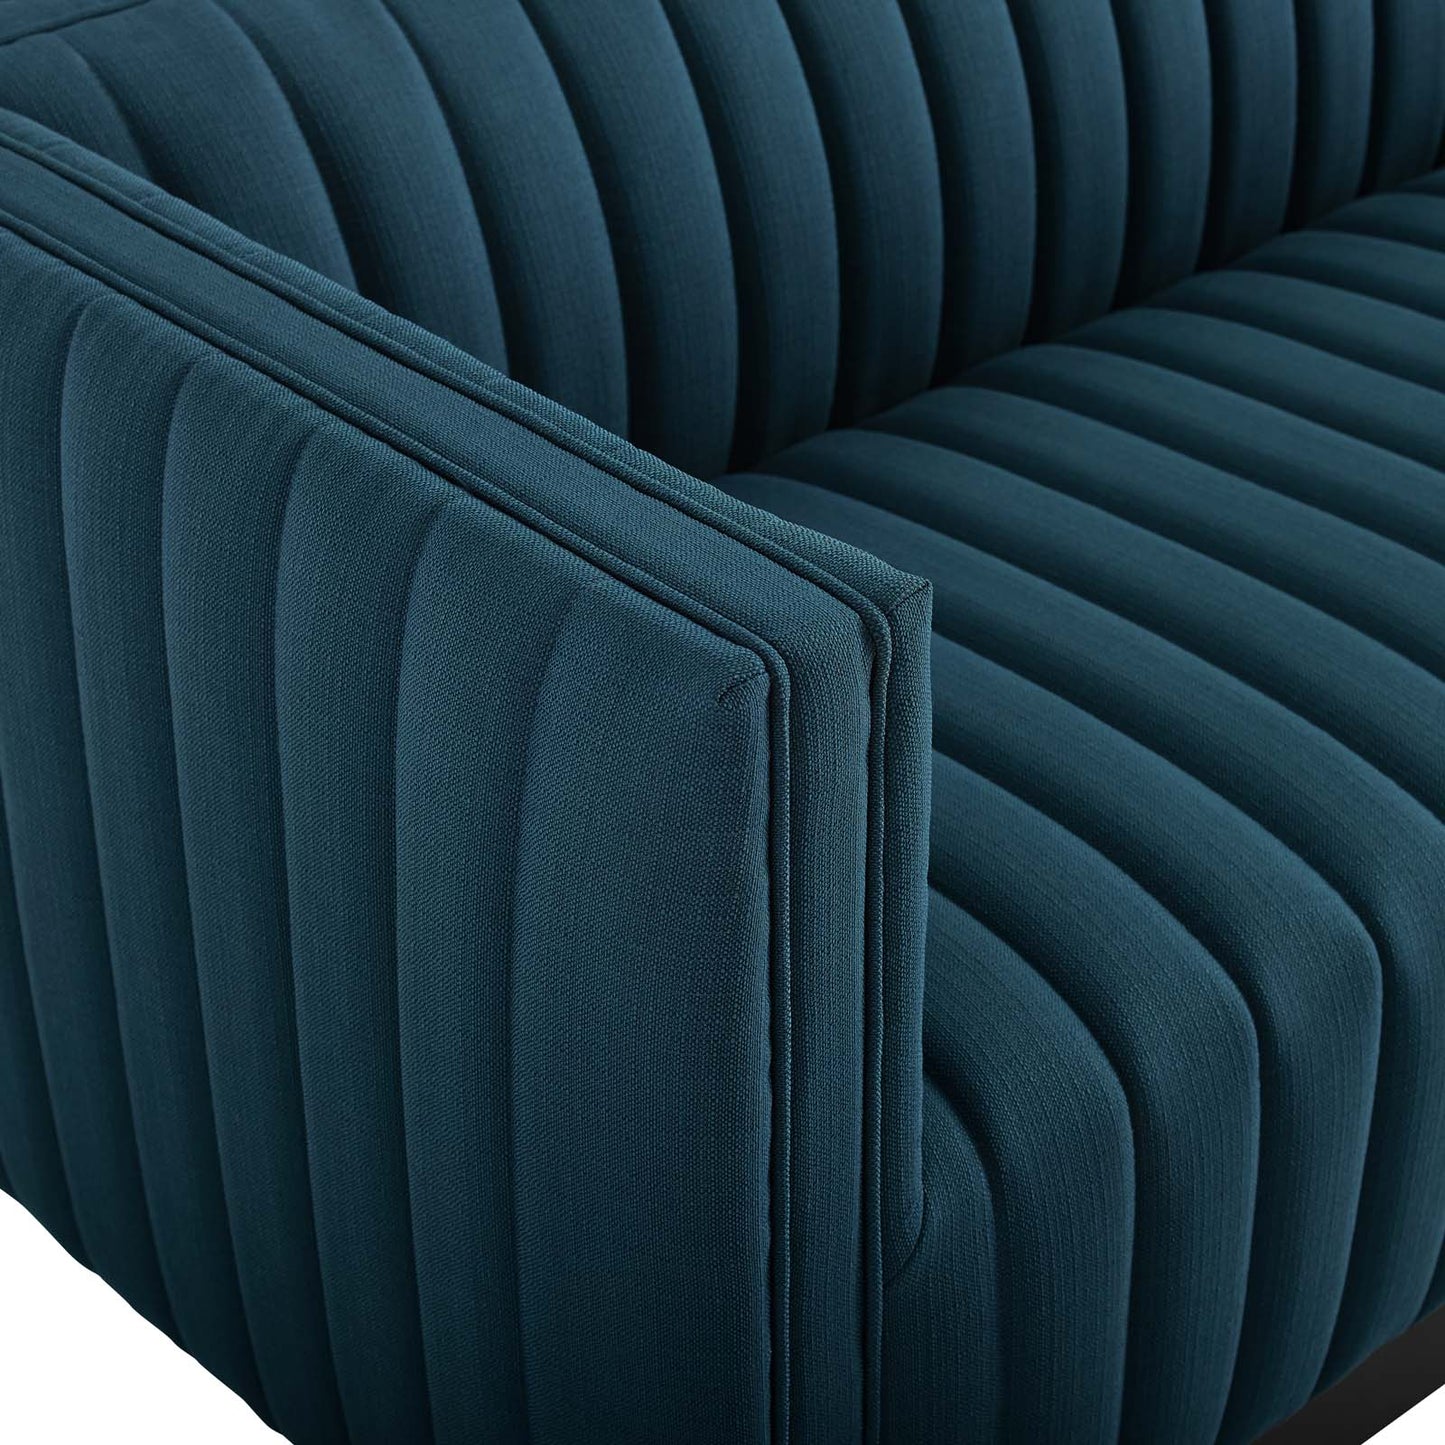 Conjure Tufted Upholstered Fabric Sofa Azure EEI-3928-AZU